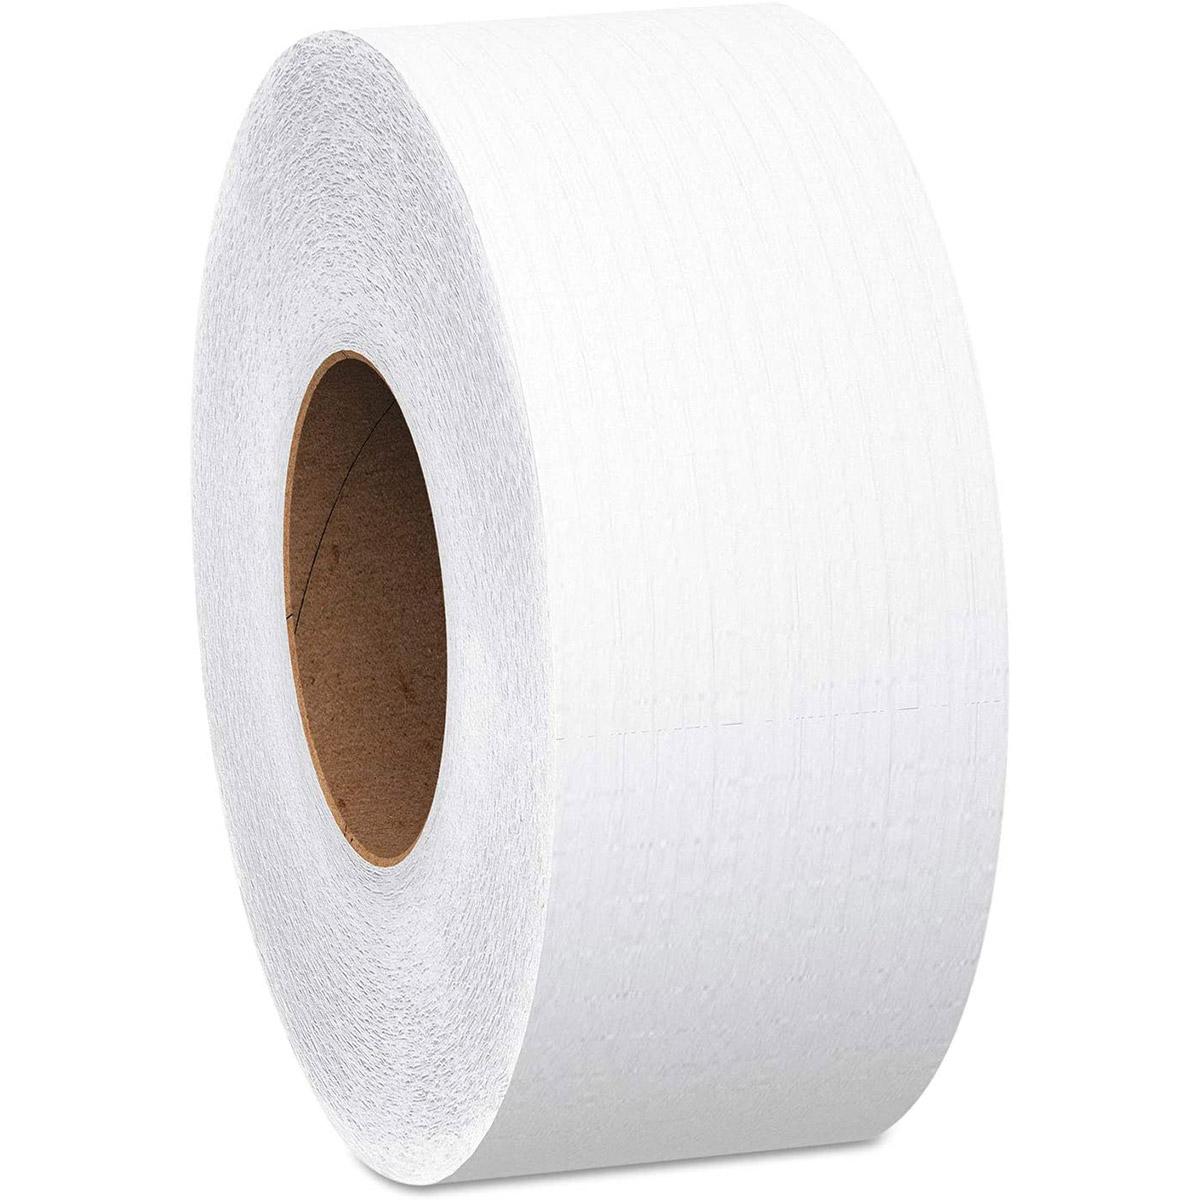 Lavex Premium 2-Ply Jumbo 720' Toilet Paper Roll with 9 Diameter - 12/Case